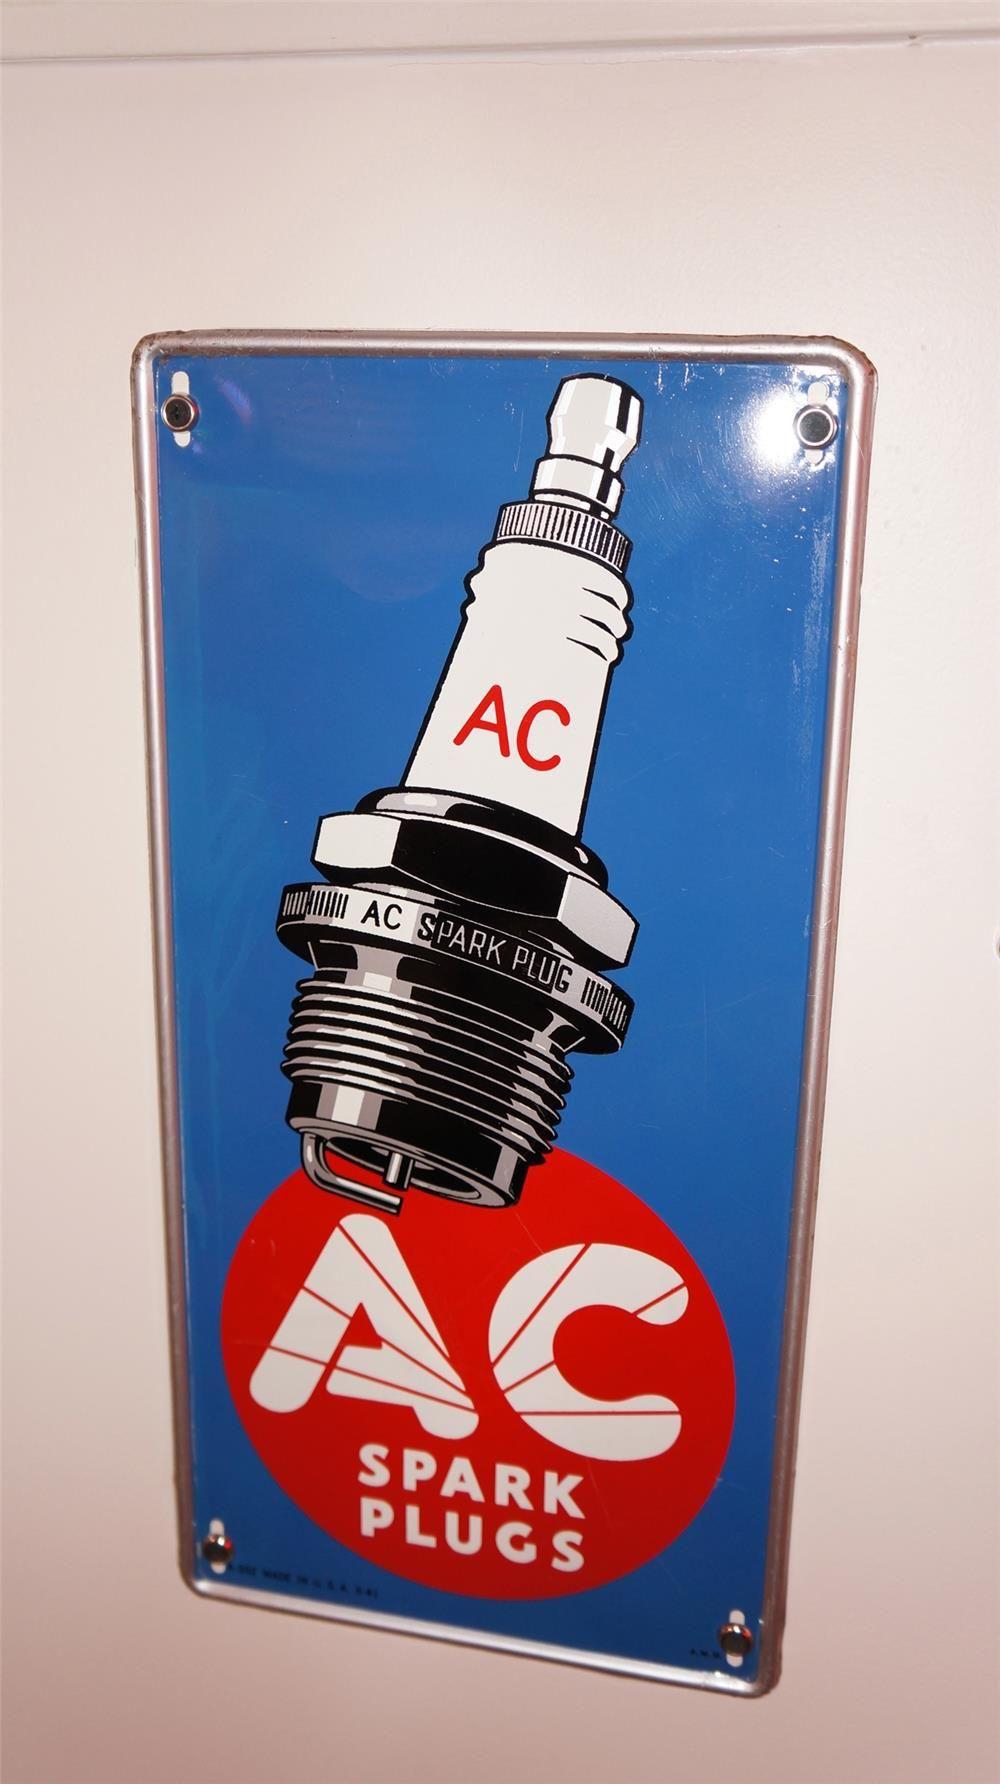 AC Spark Plug Logo - N.O.S. 1941 AC Spark Plugs self-framed vertical tin automotiv